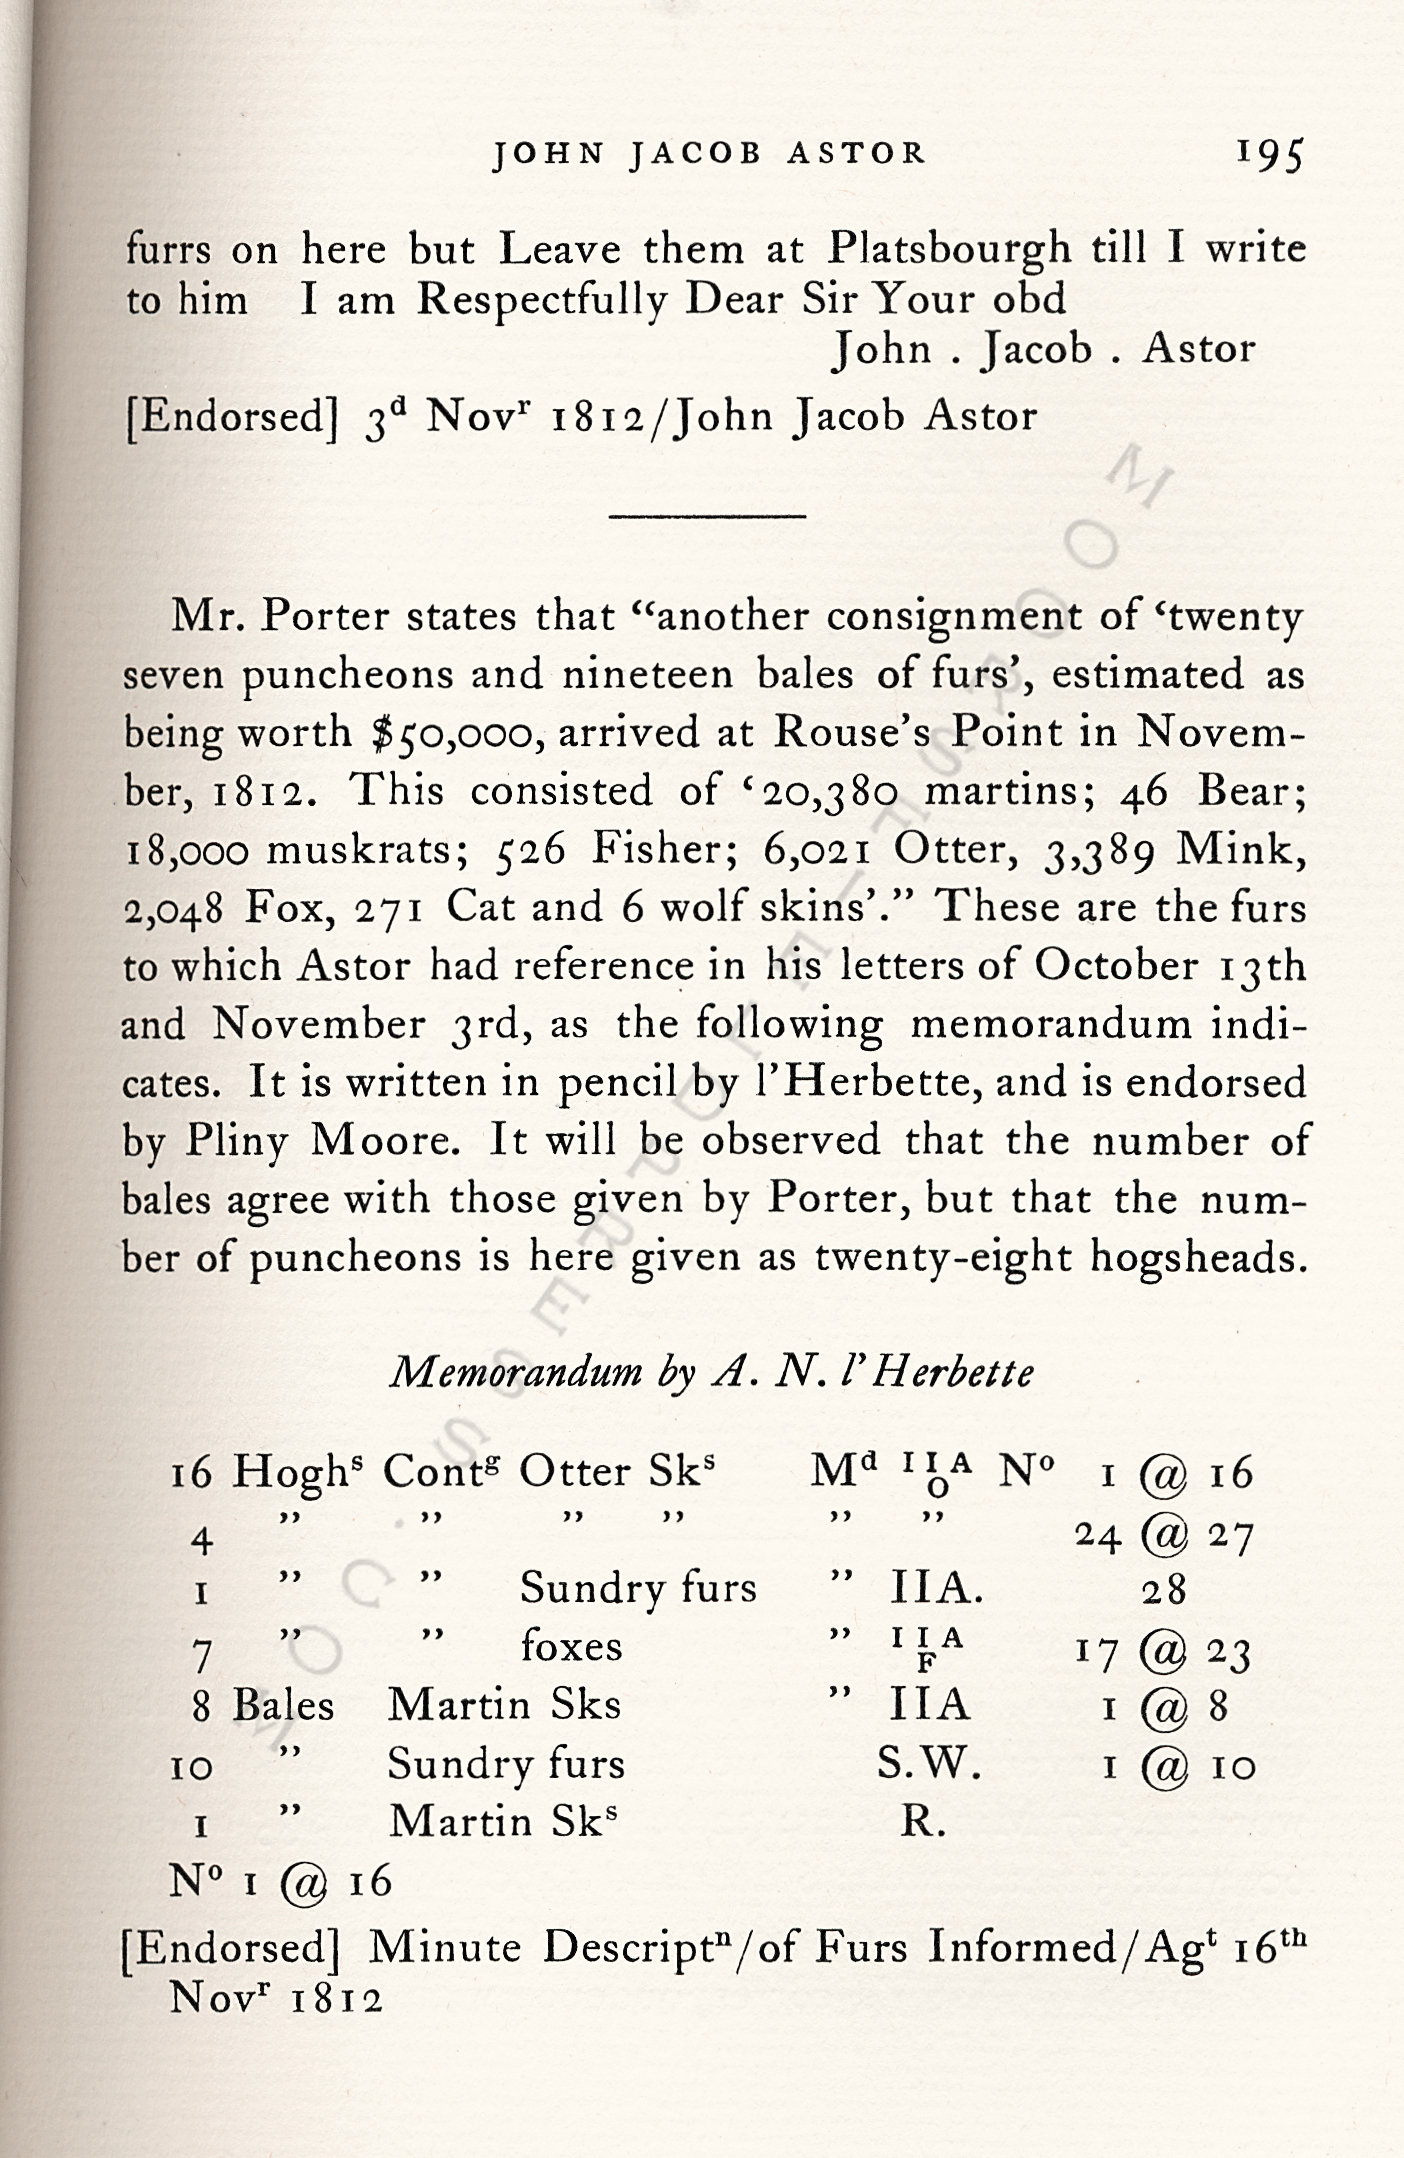 John Jacob
                      Astor Correspondence-Fur Trade with Lower Canada